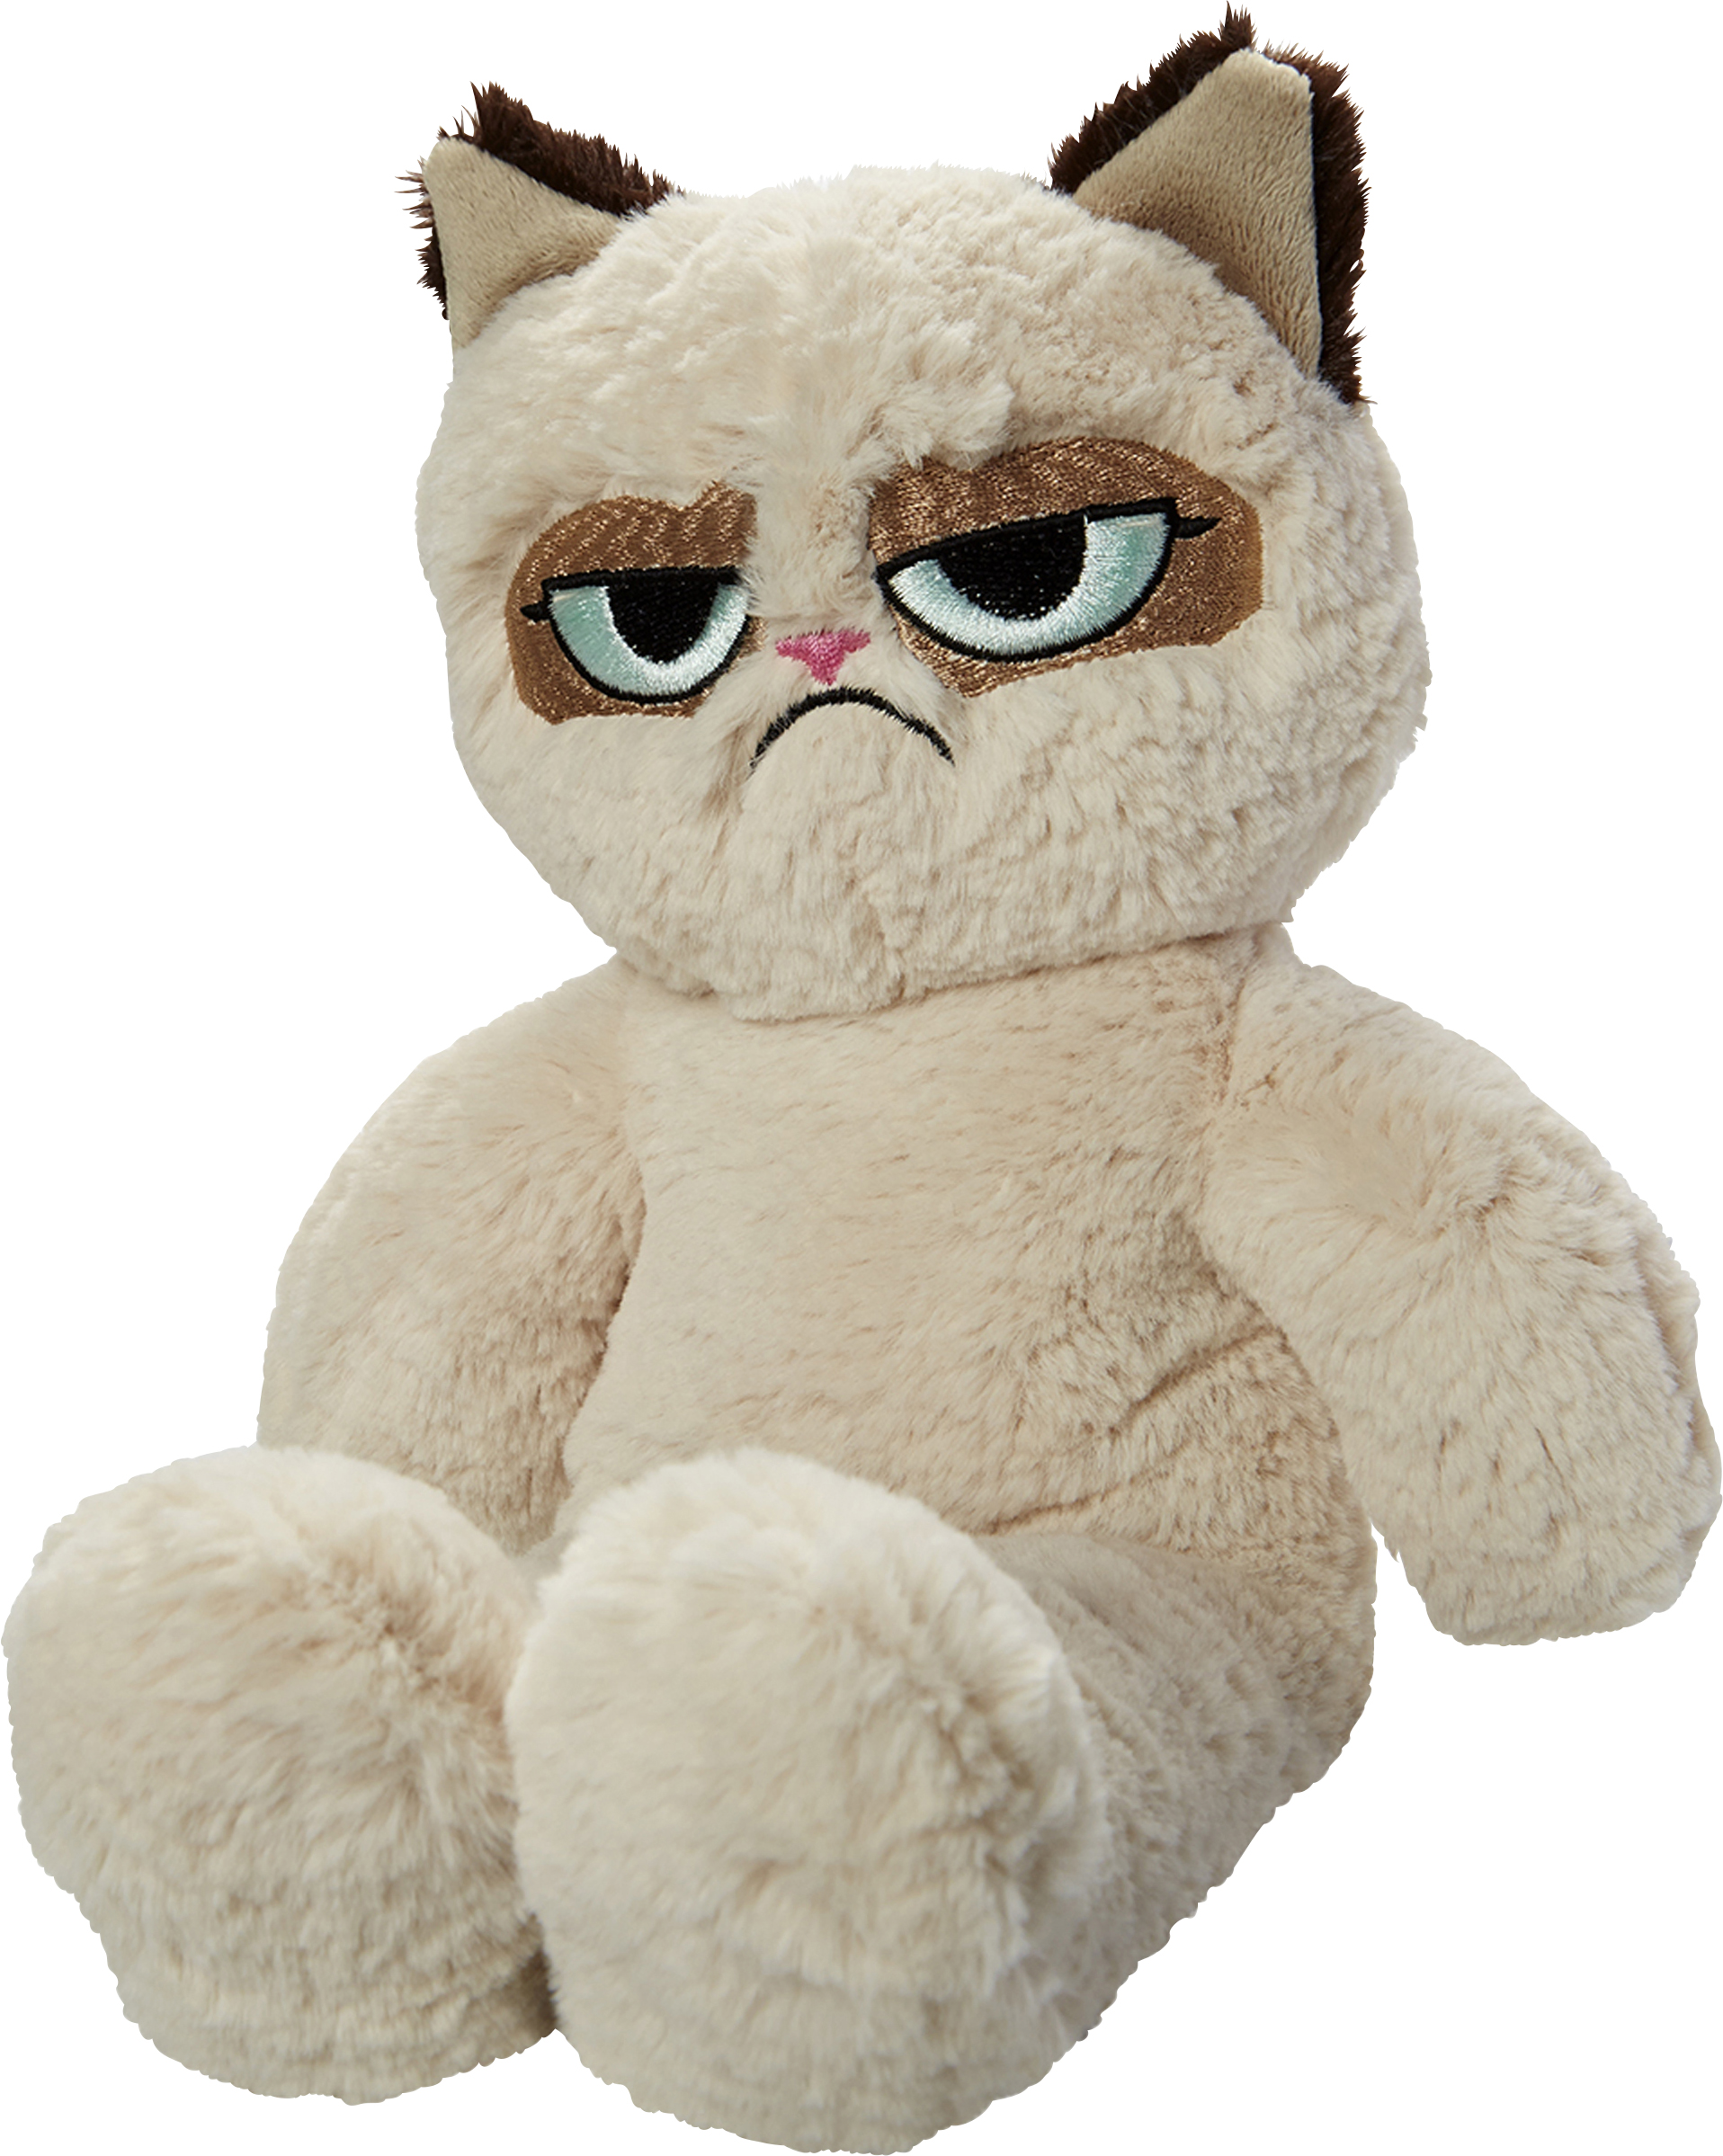 Hundleksak Grumpy Cat Floppy Plush